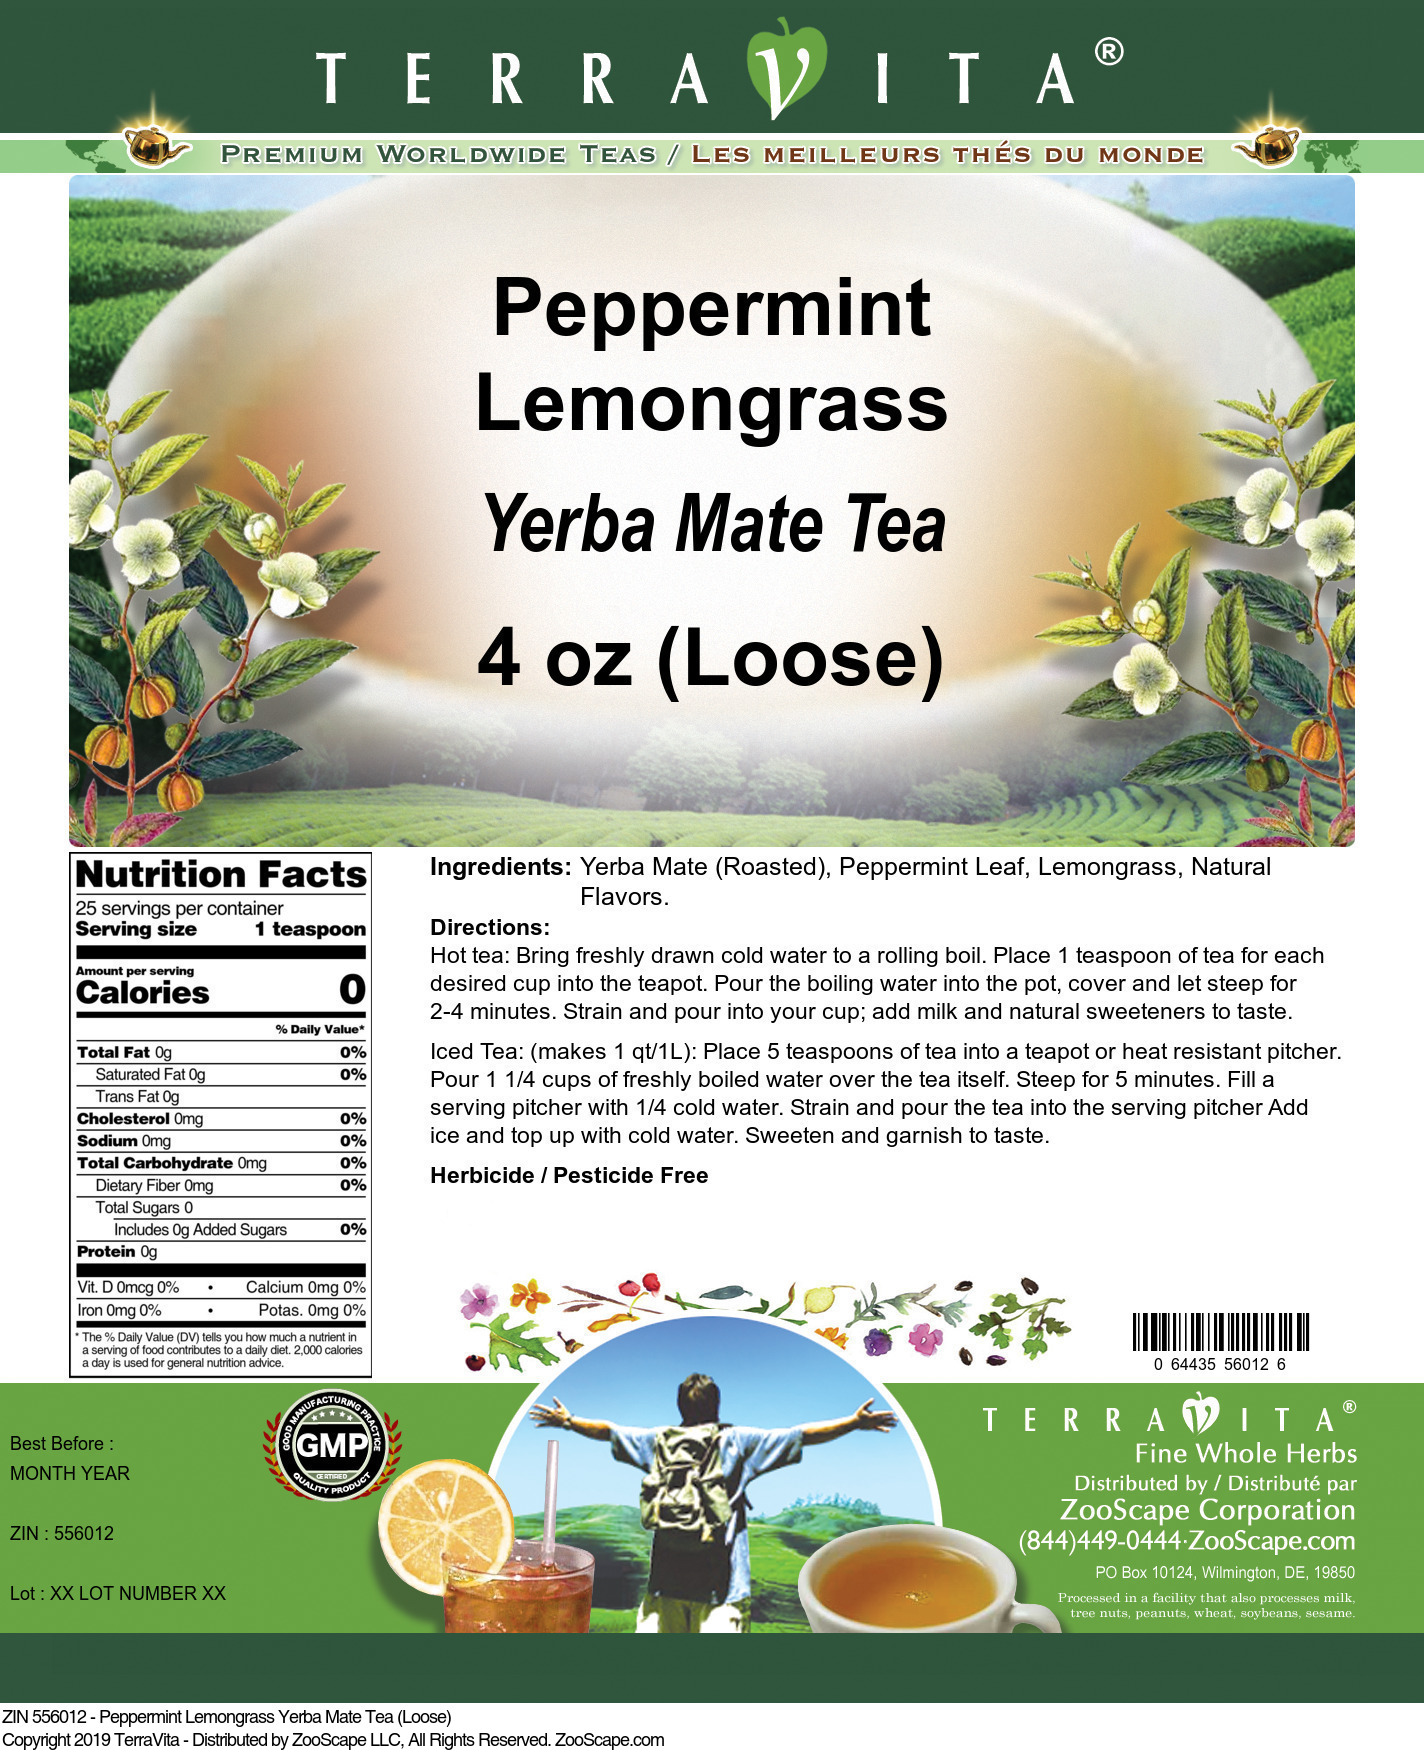 Peppermint Lemongrass Yerba Mate Tea (Loose) - Label